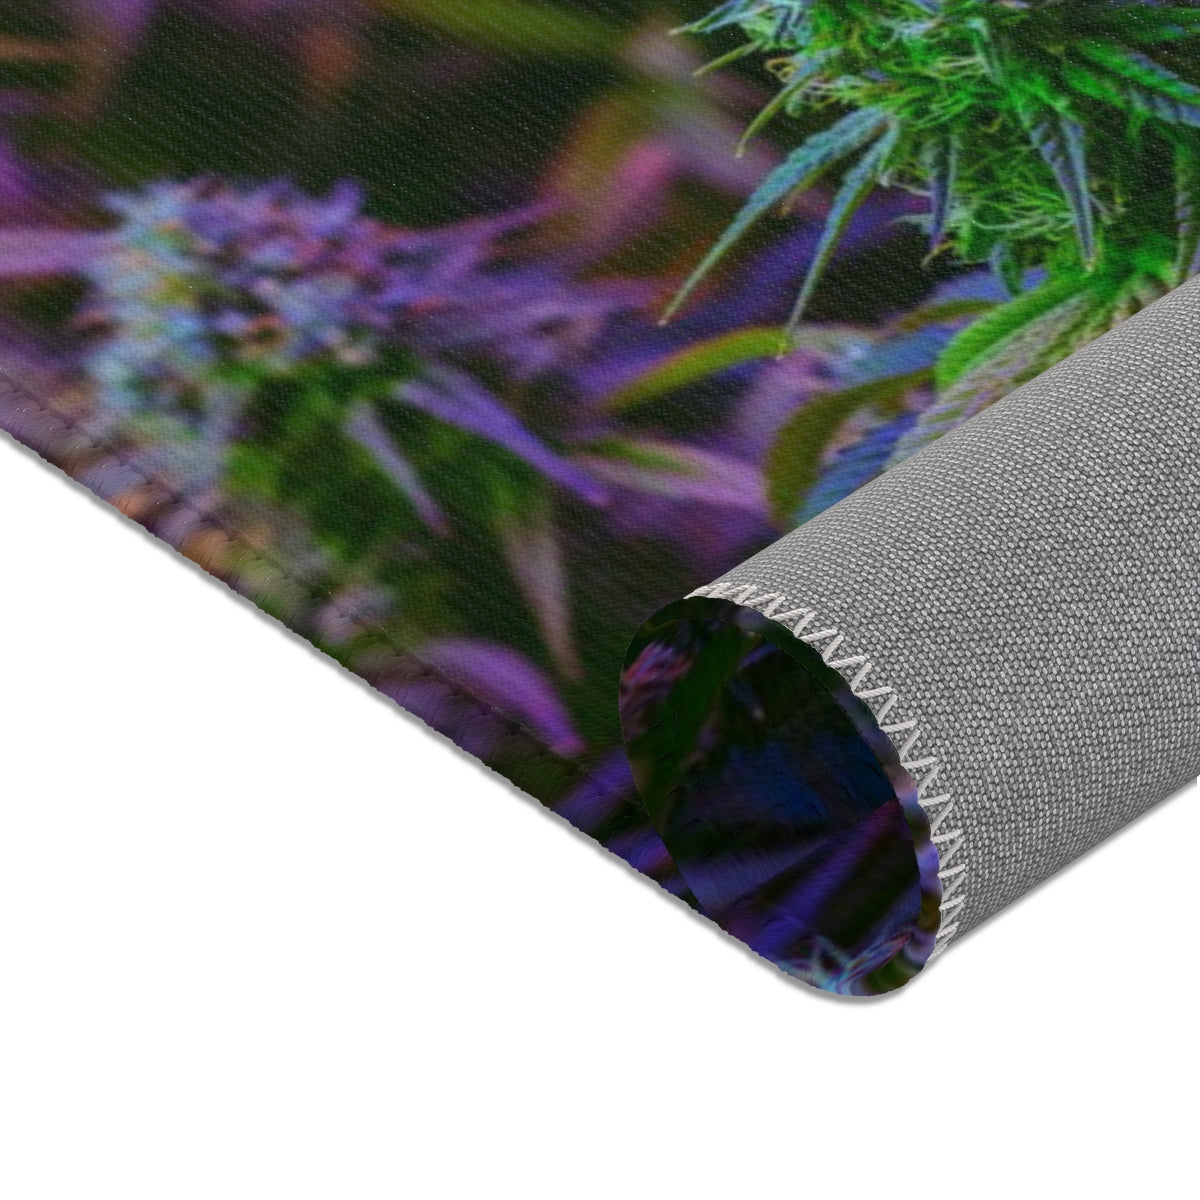 The Purple Cannabis Area Rugs